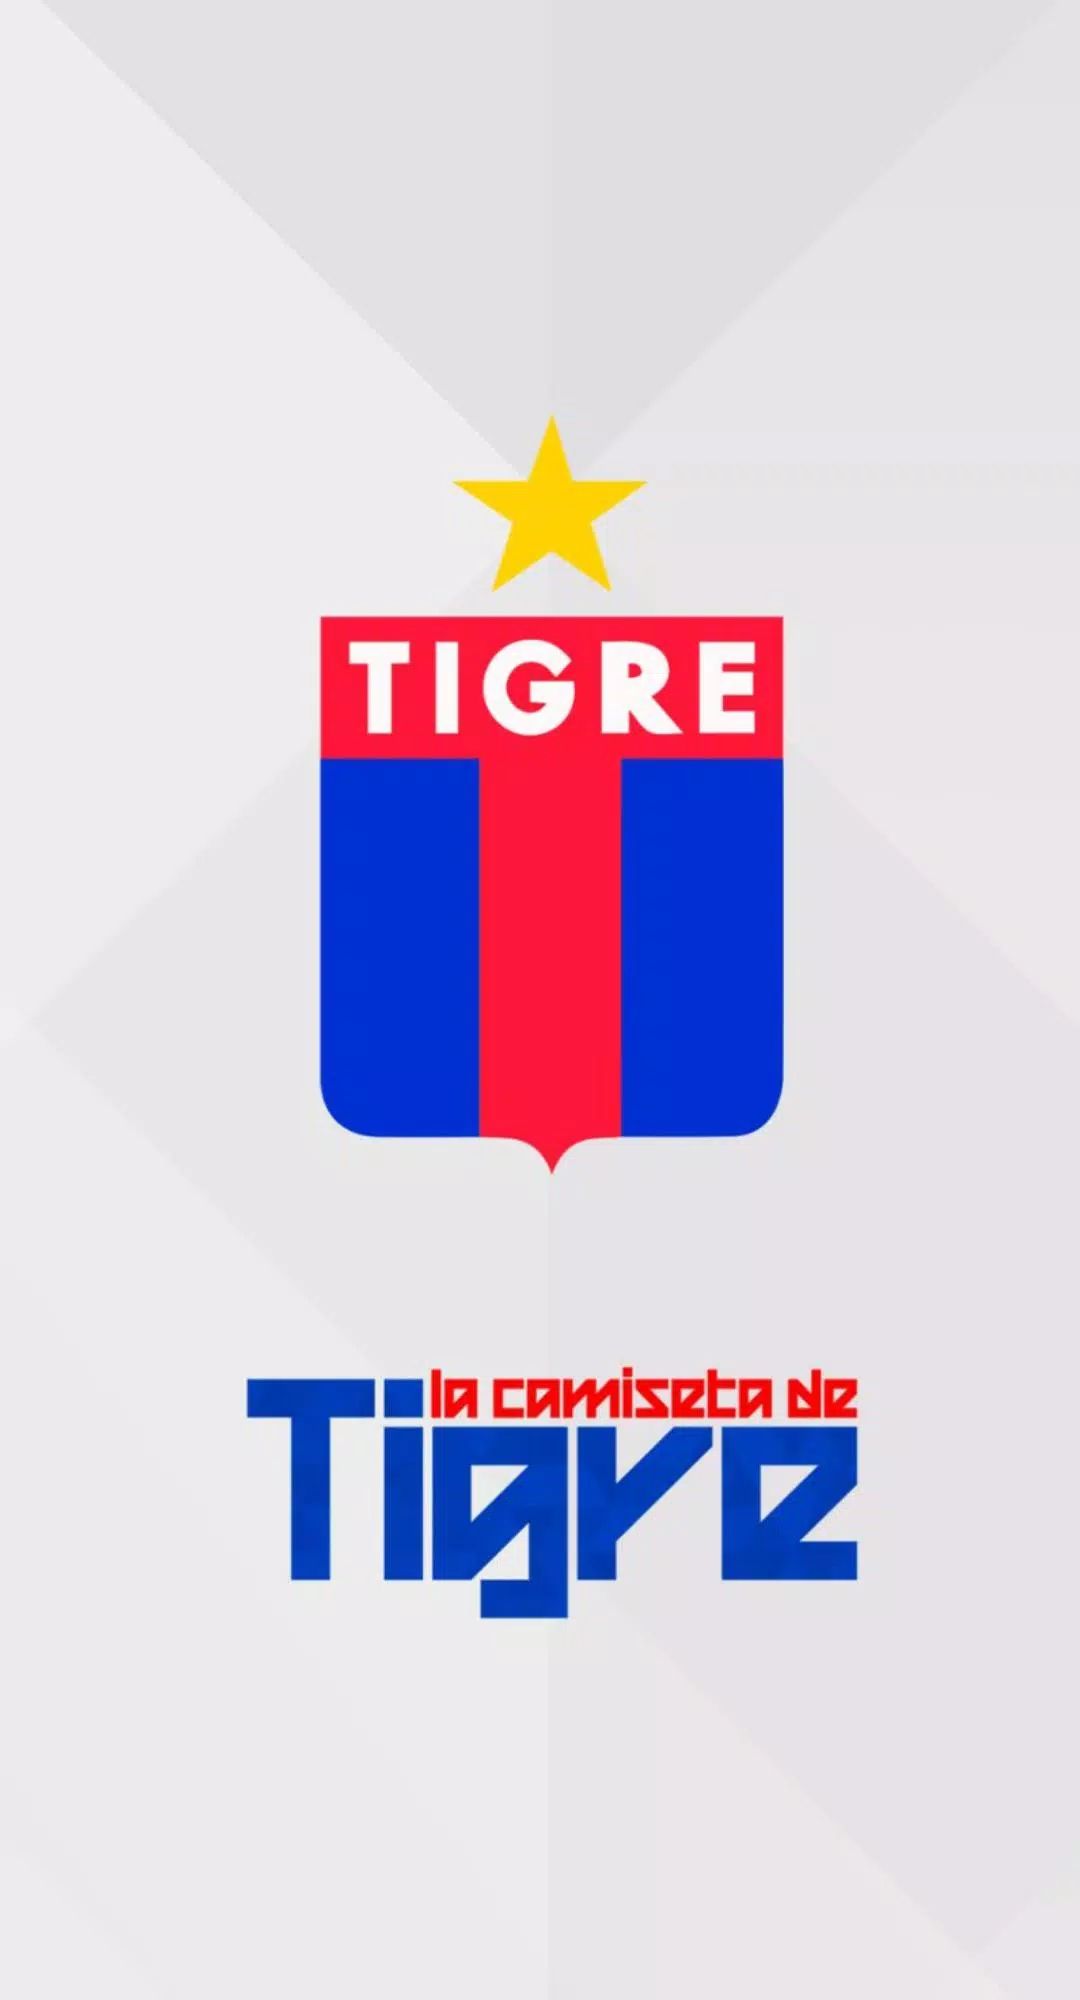 Club Atlético Tigre added a new - Club Atlético Tigre